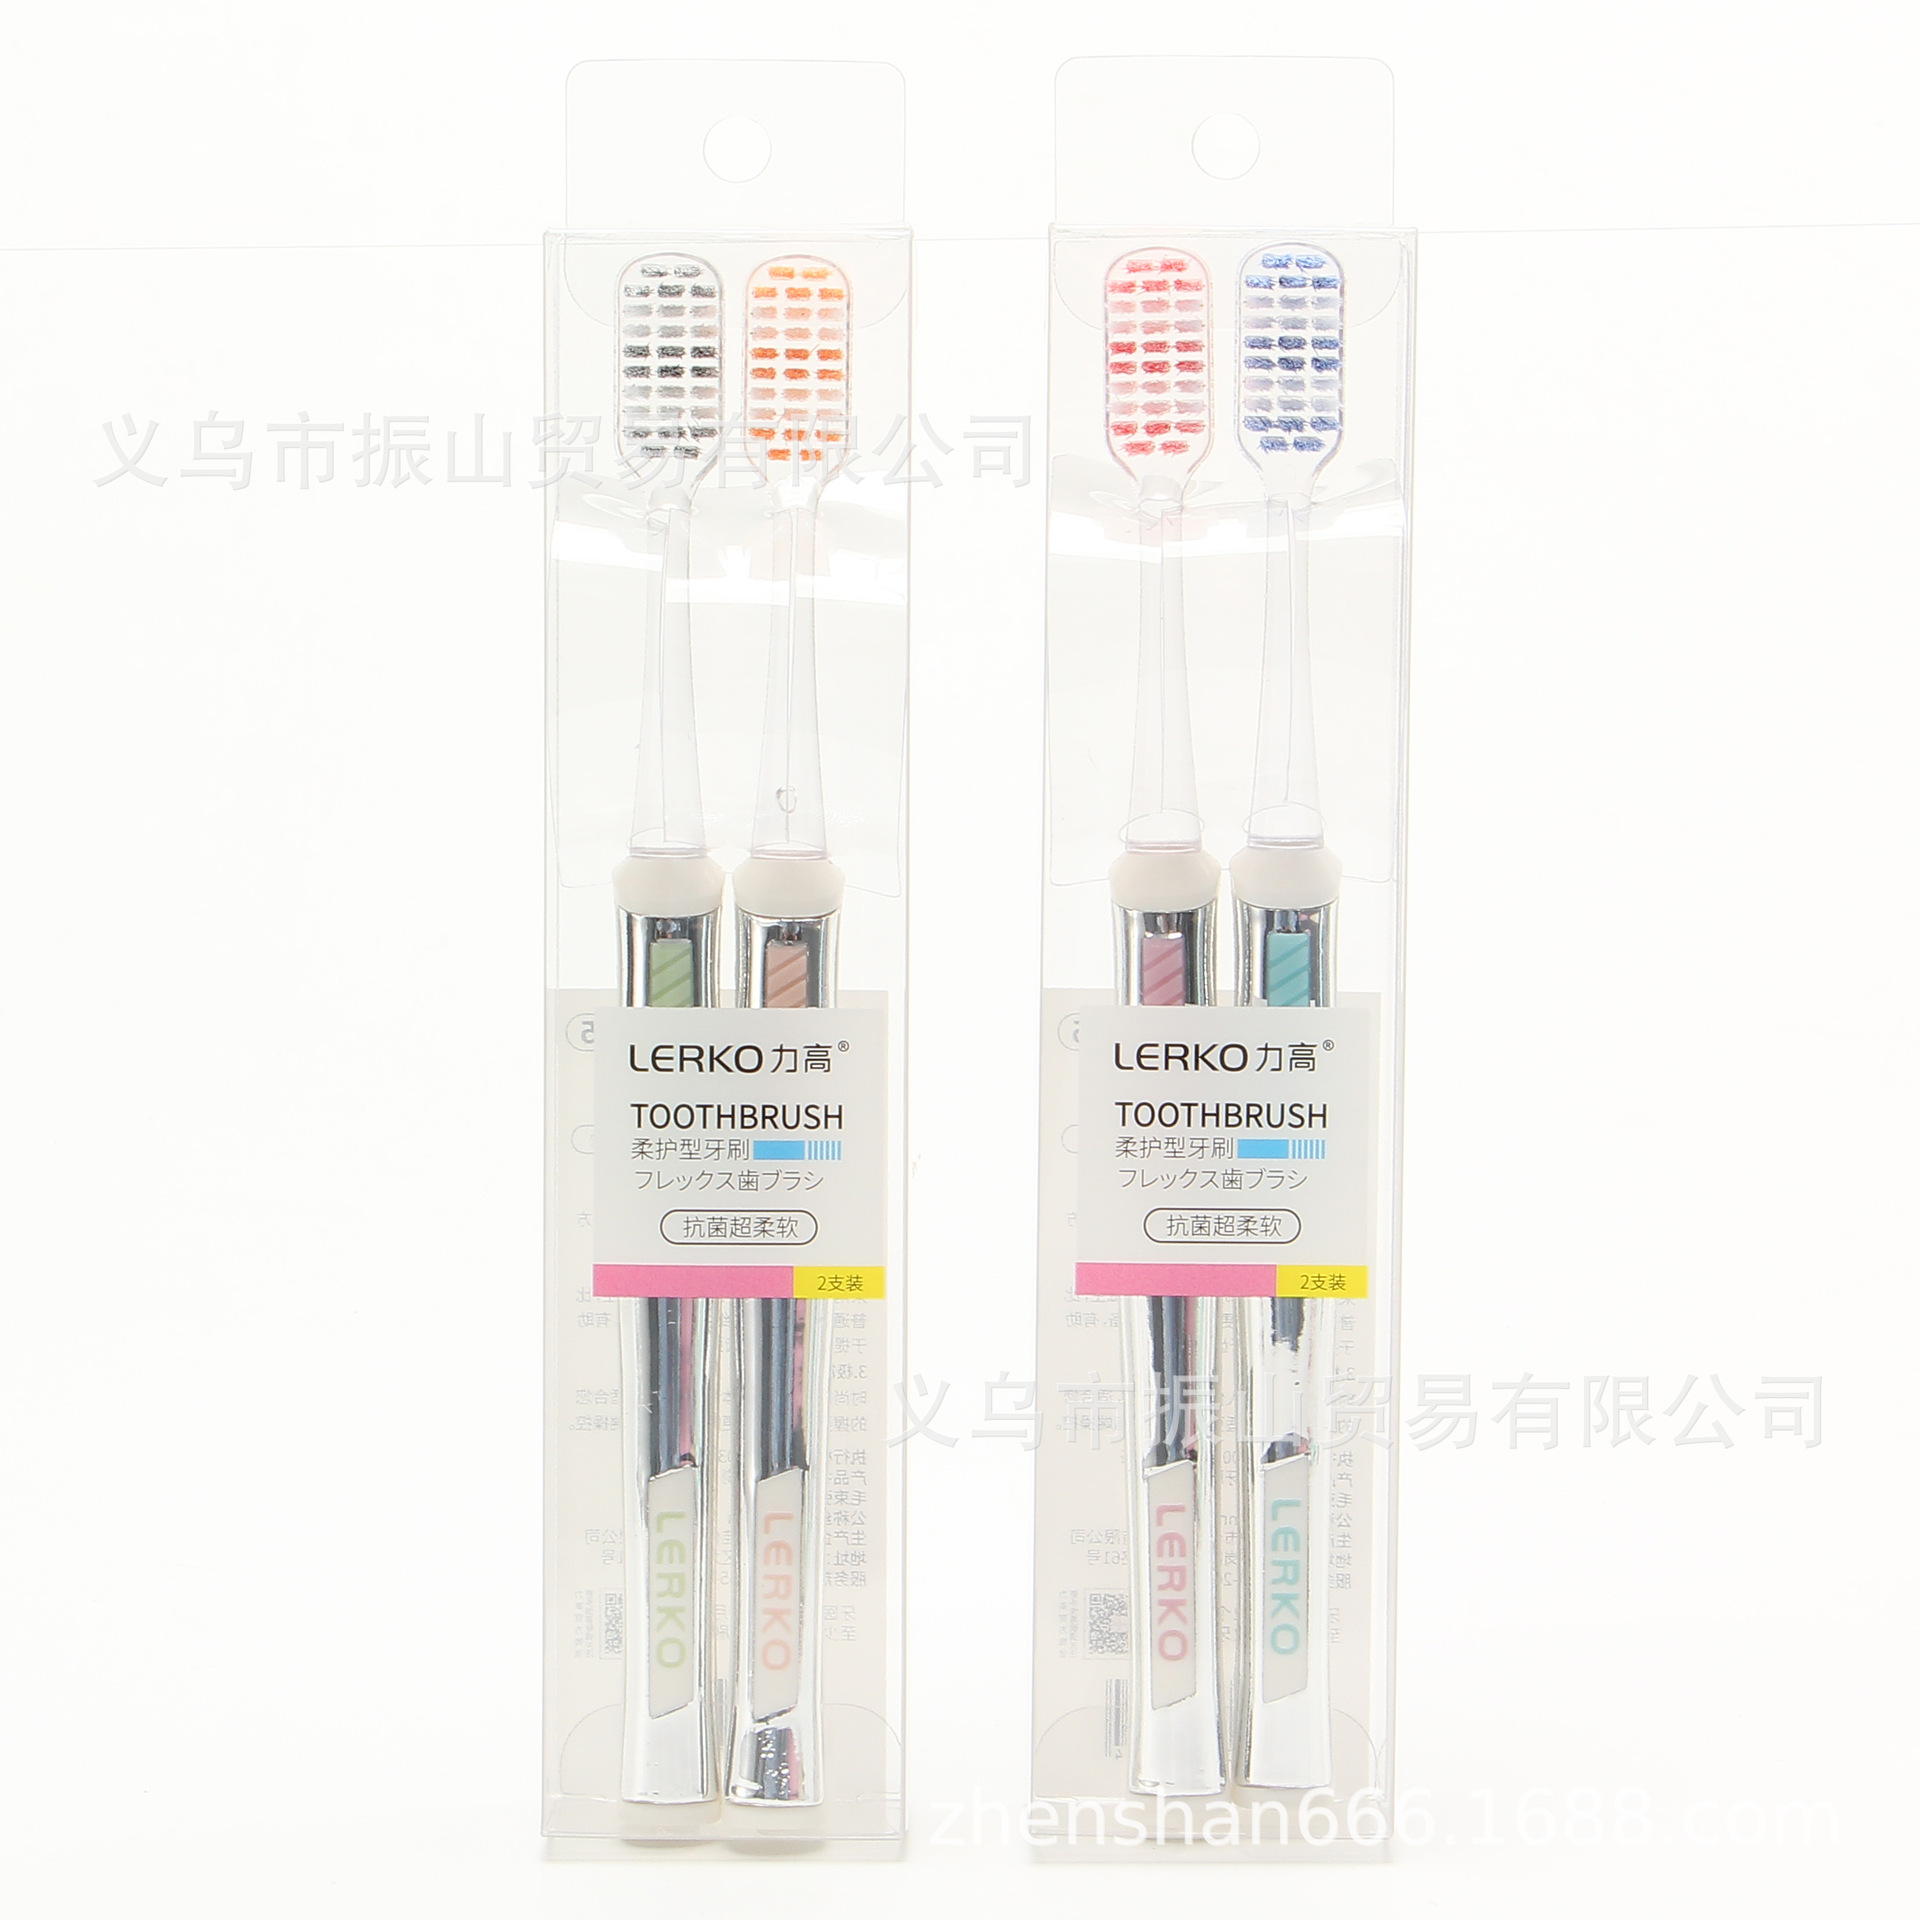 ligao 805 pvc box couple pack streamer toothbrush handle horizontal hair arrangement spiral soft-bristle toothbrush